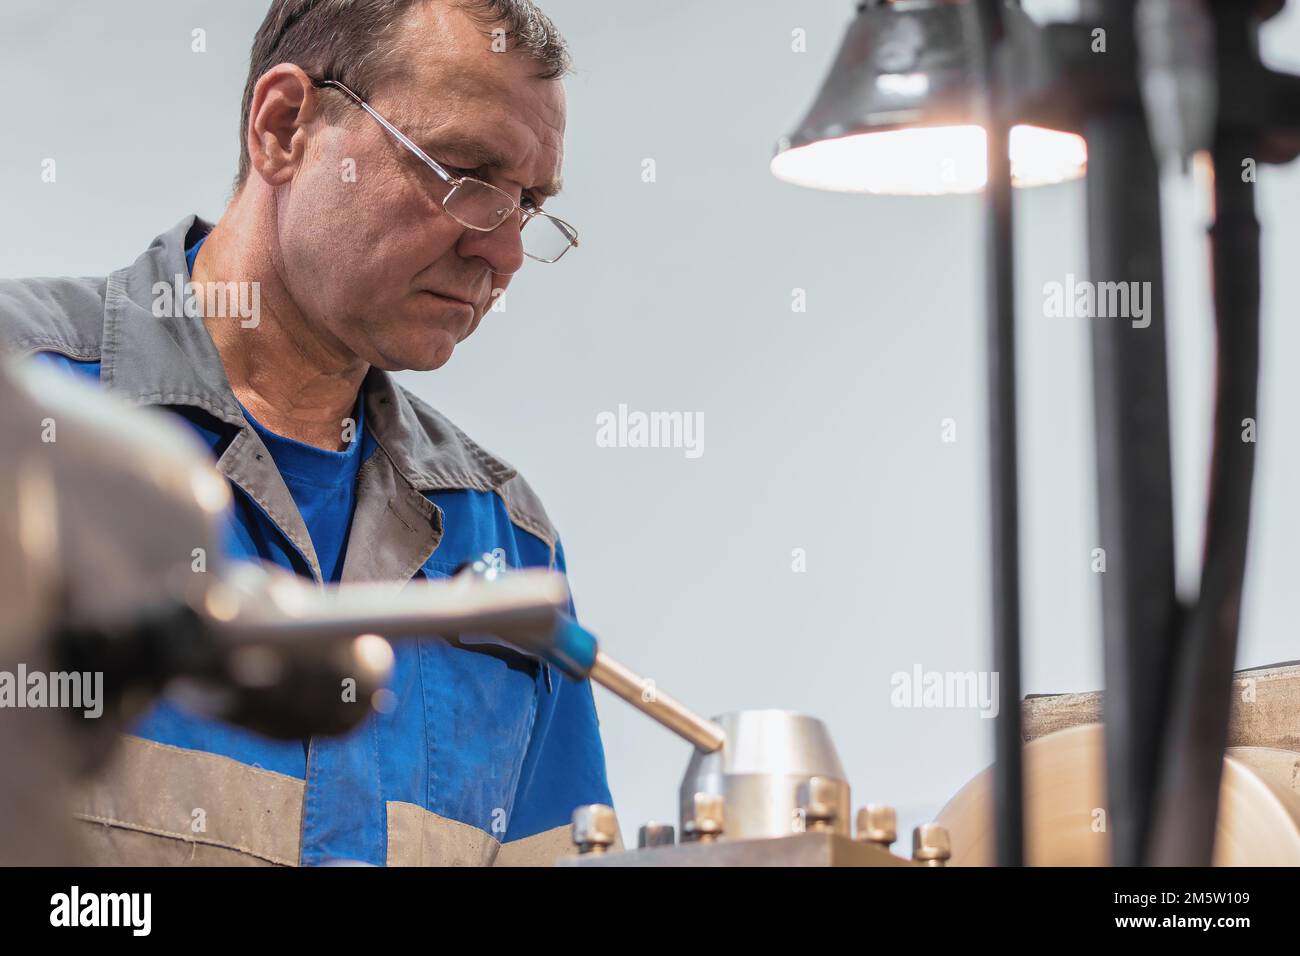 Portrait of turner with glasses 50-55 years old at work. Elderly metal turner works in workshop on machine behind job.. Stock Photo